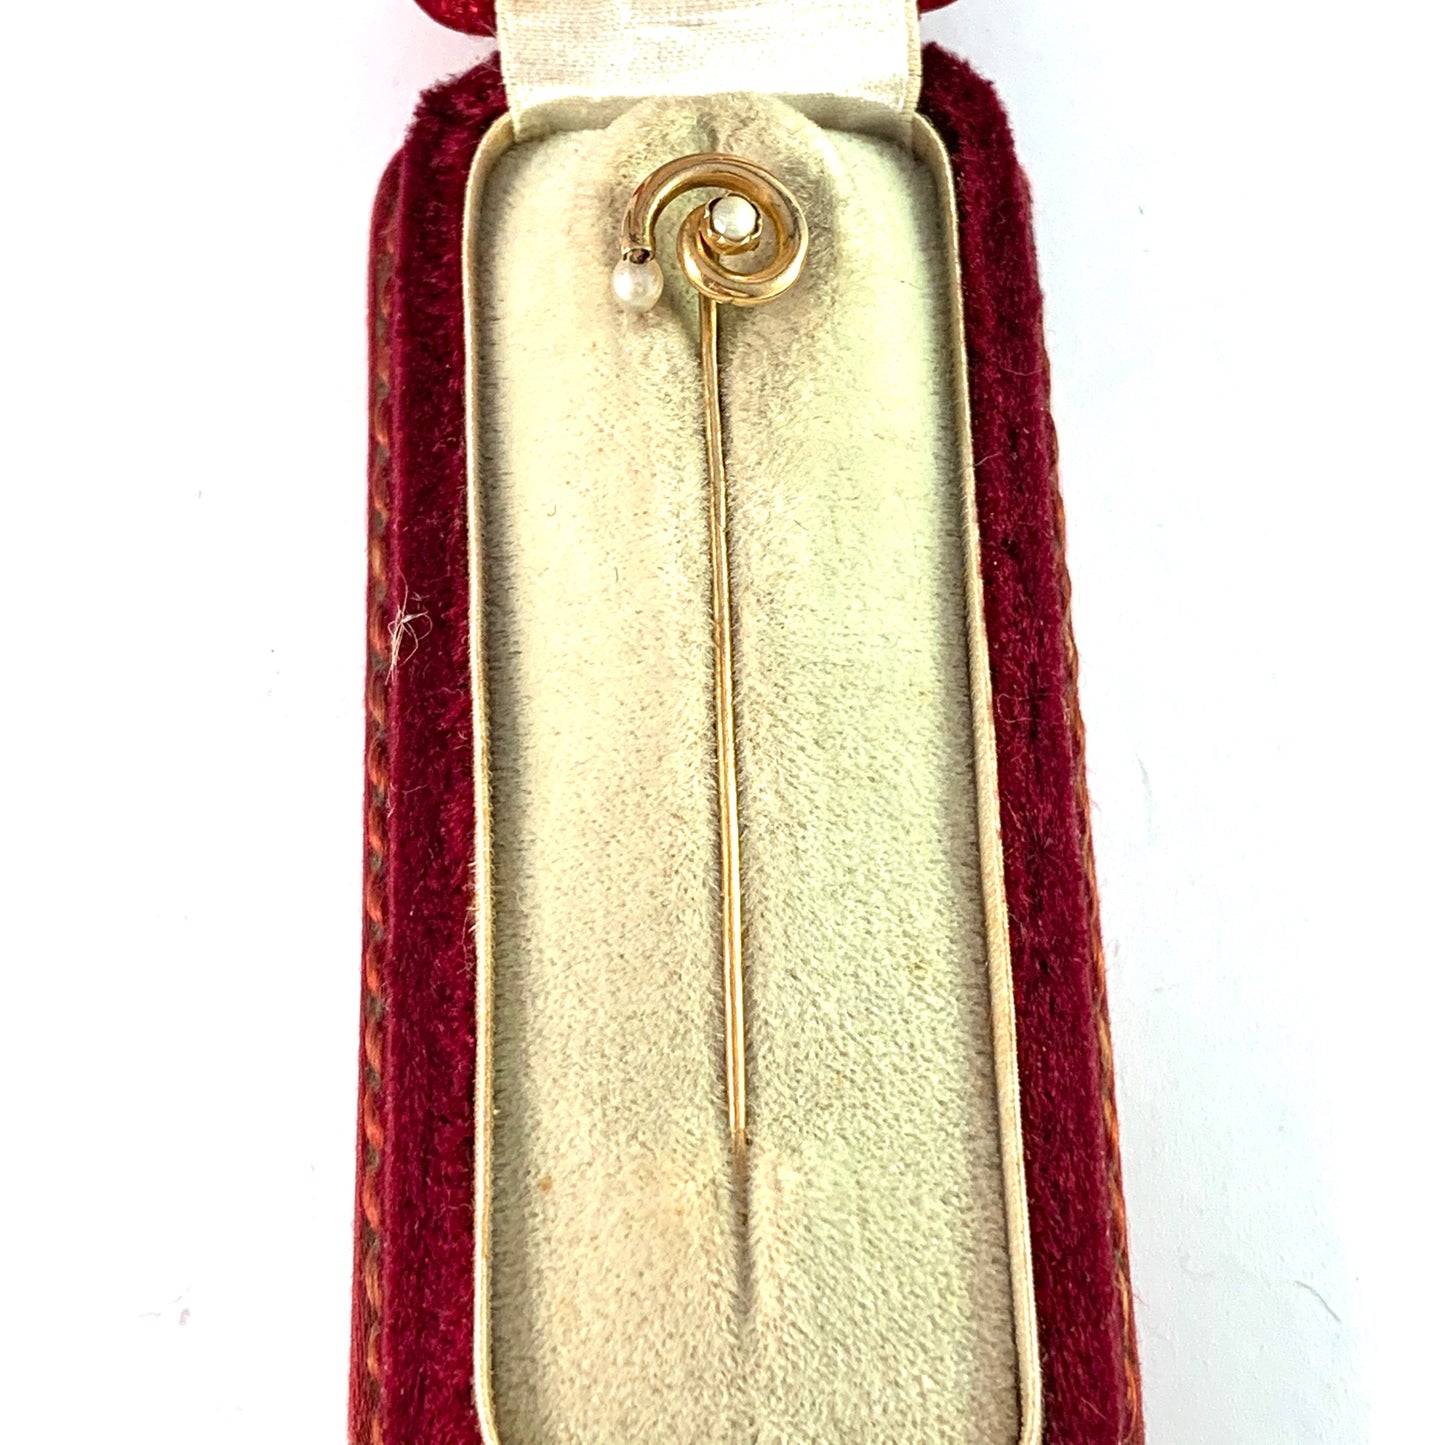 E Möller, Sweden c year 1910 Antique 18k Gold Pearl Pin in Original Box.